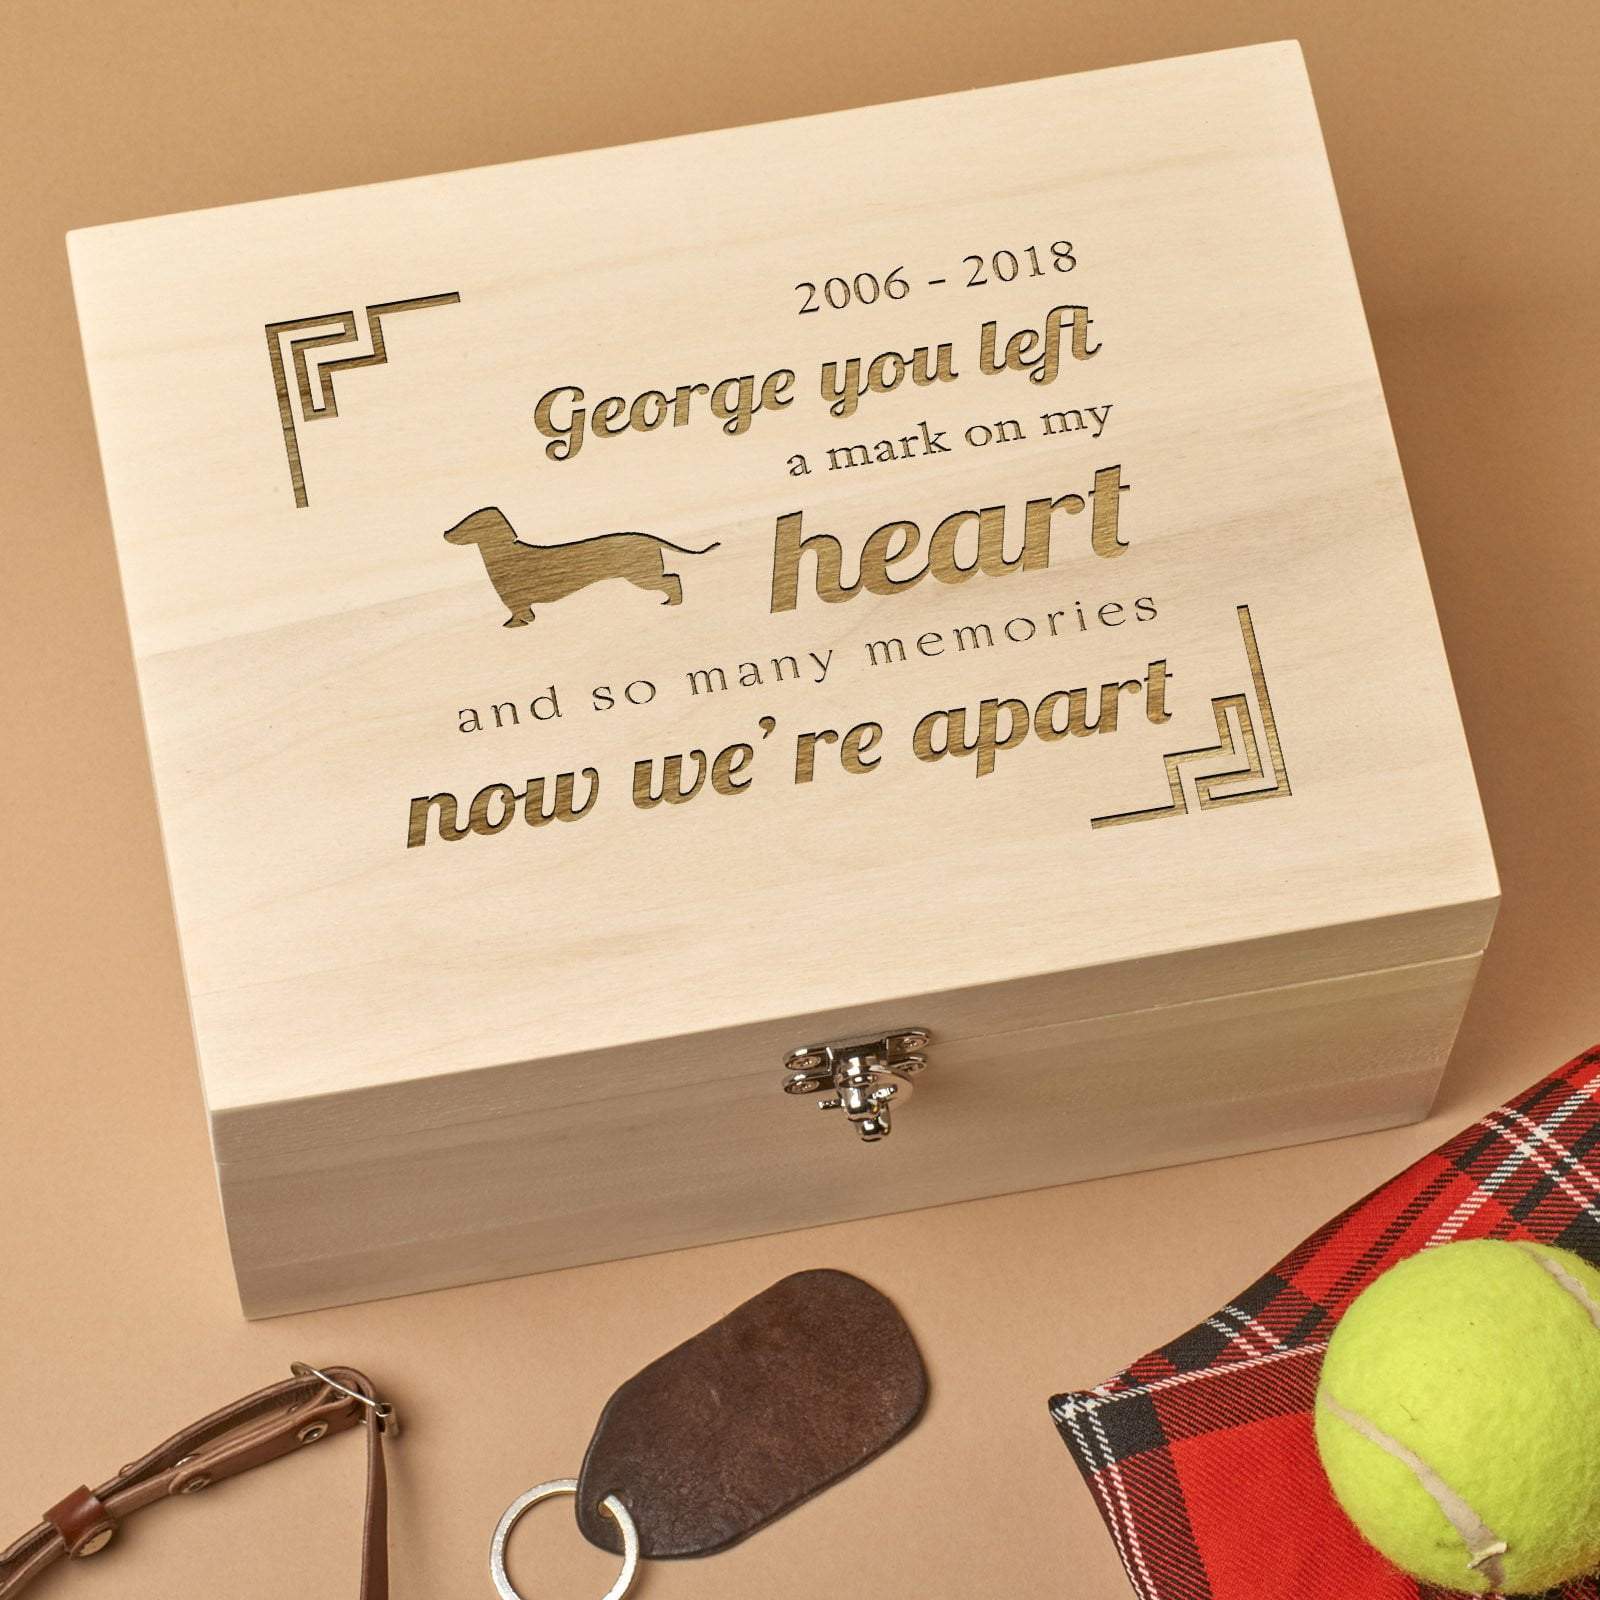 Keepsake Box - Personalised Wooden Pet Memorial Box - Heart